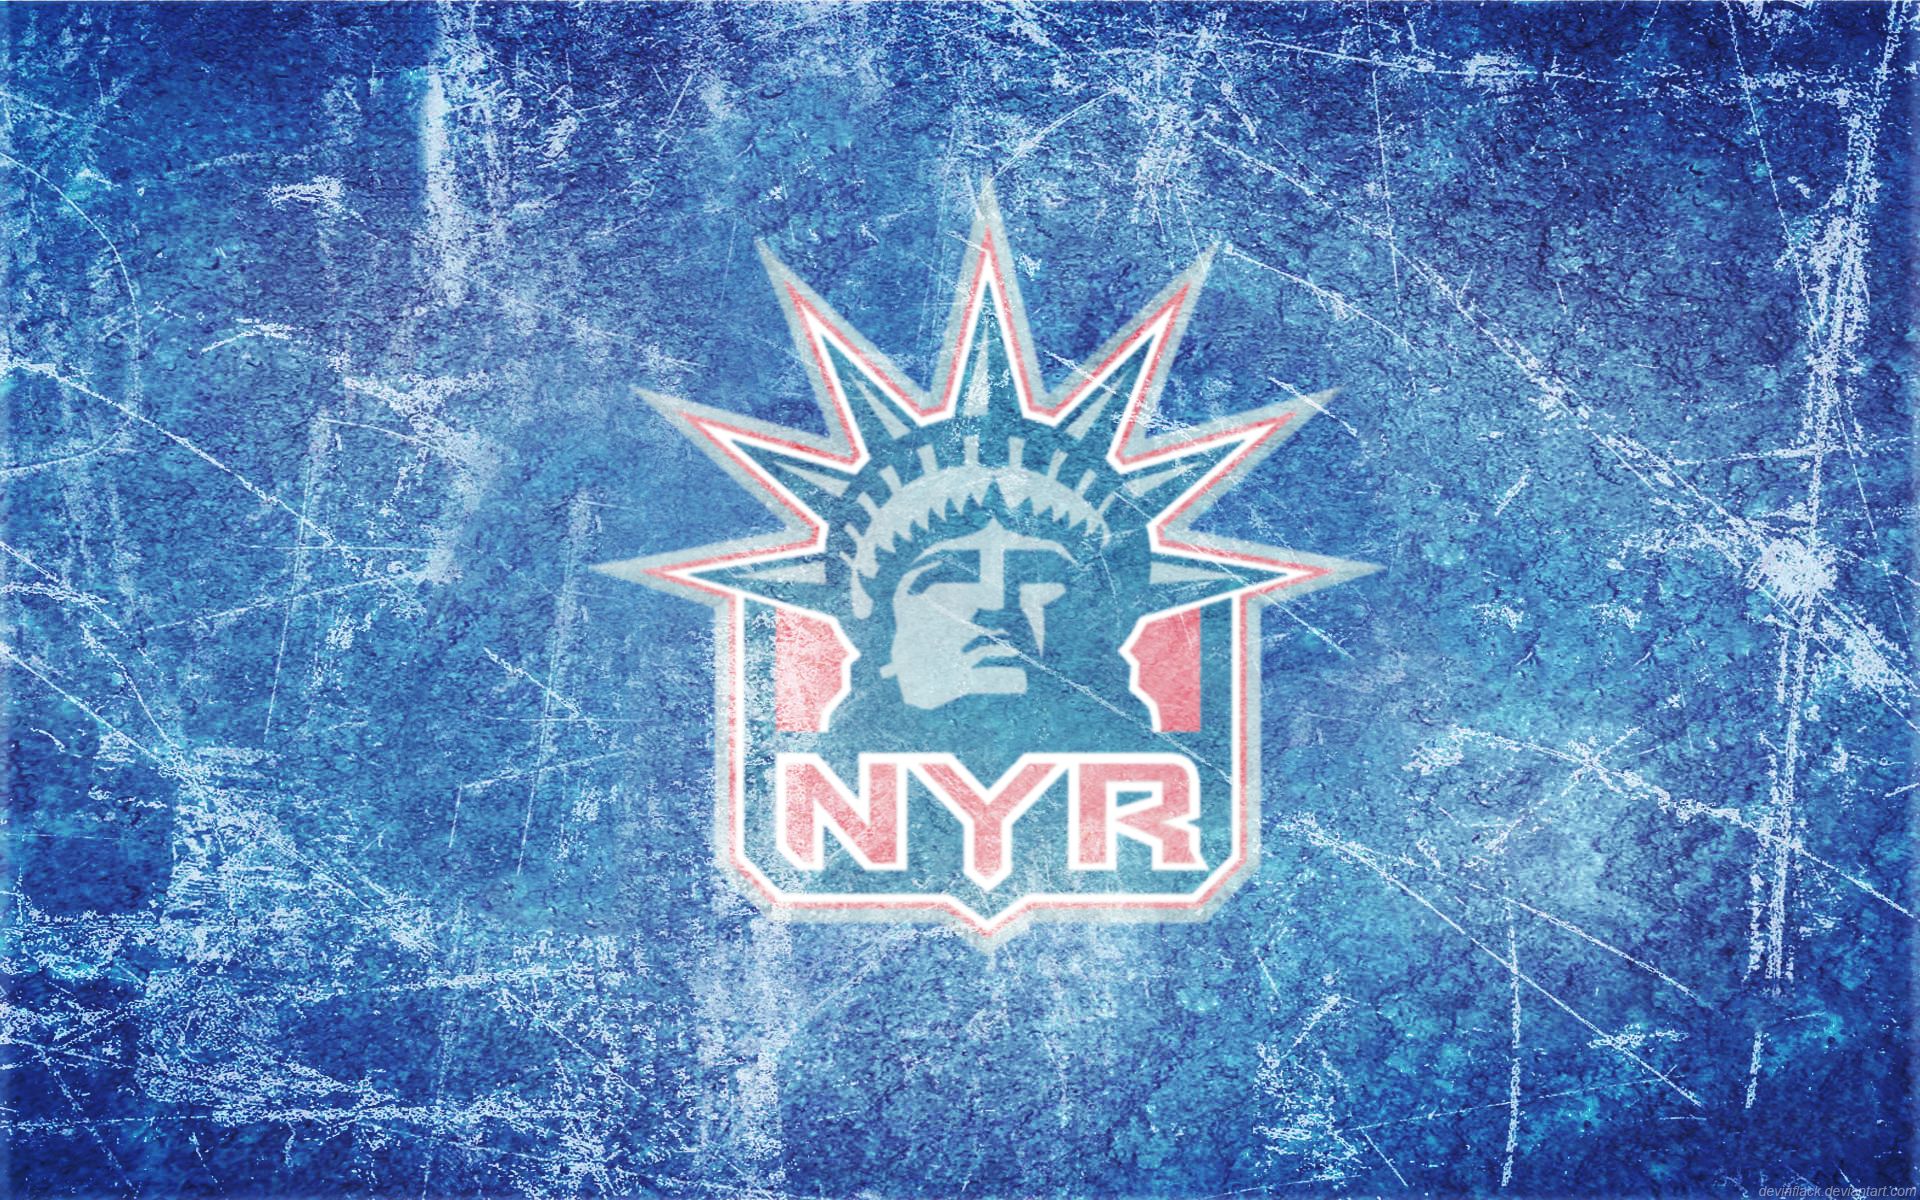 New York Rangers wallpapers for desktop, download free New York